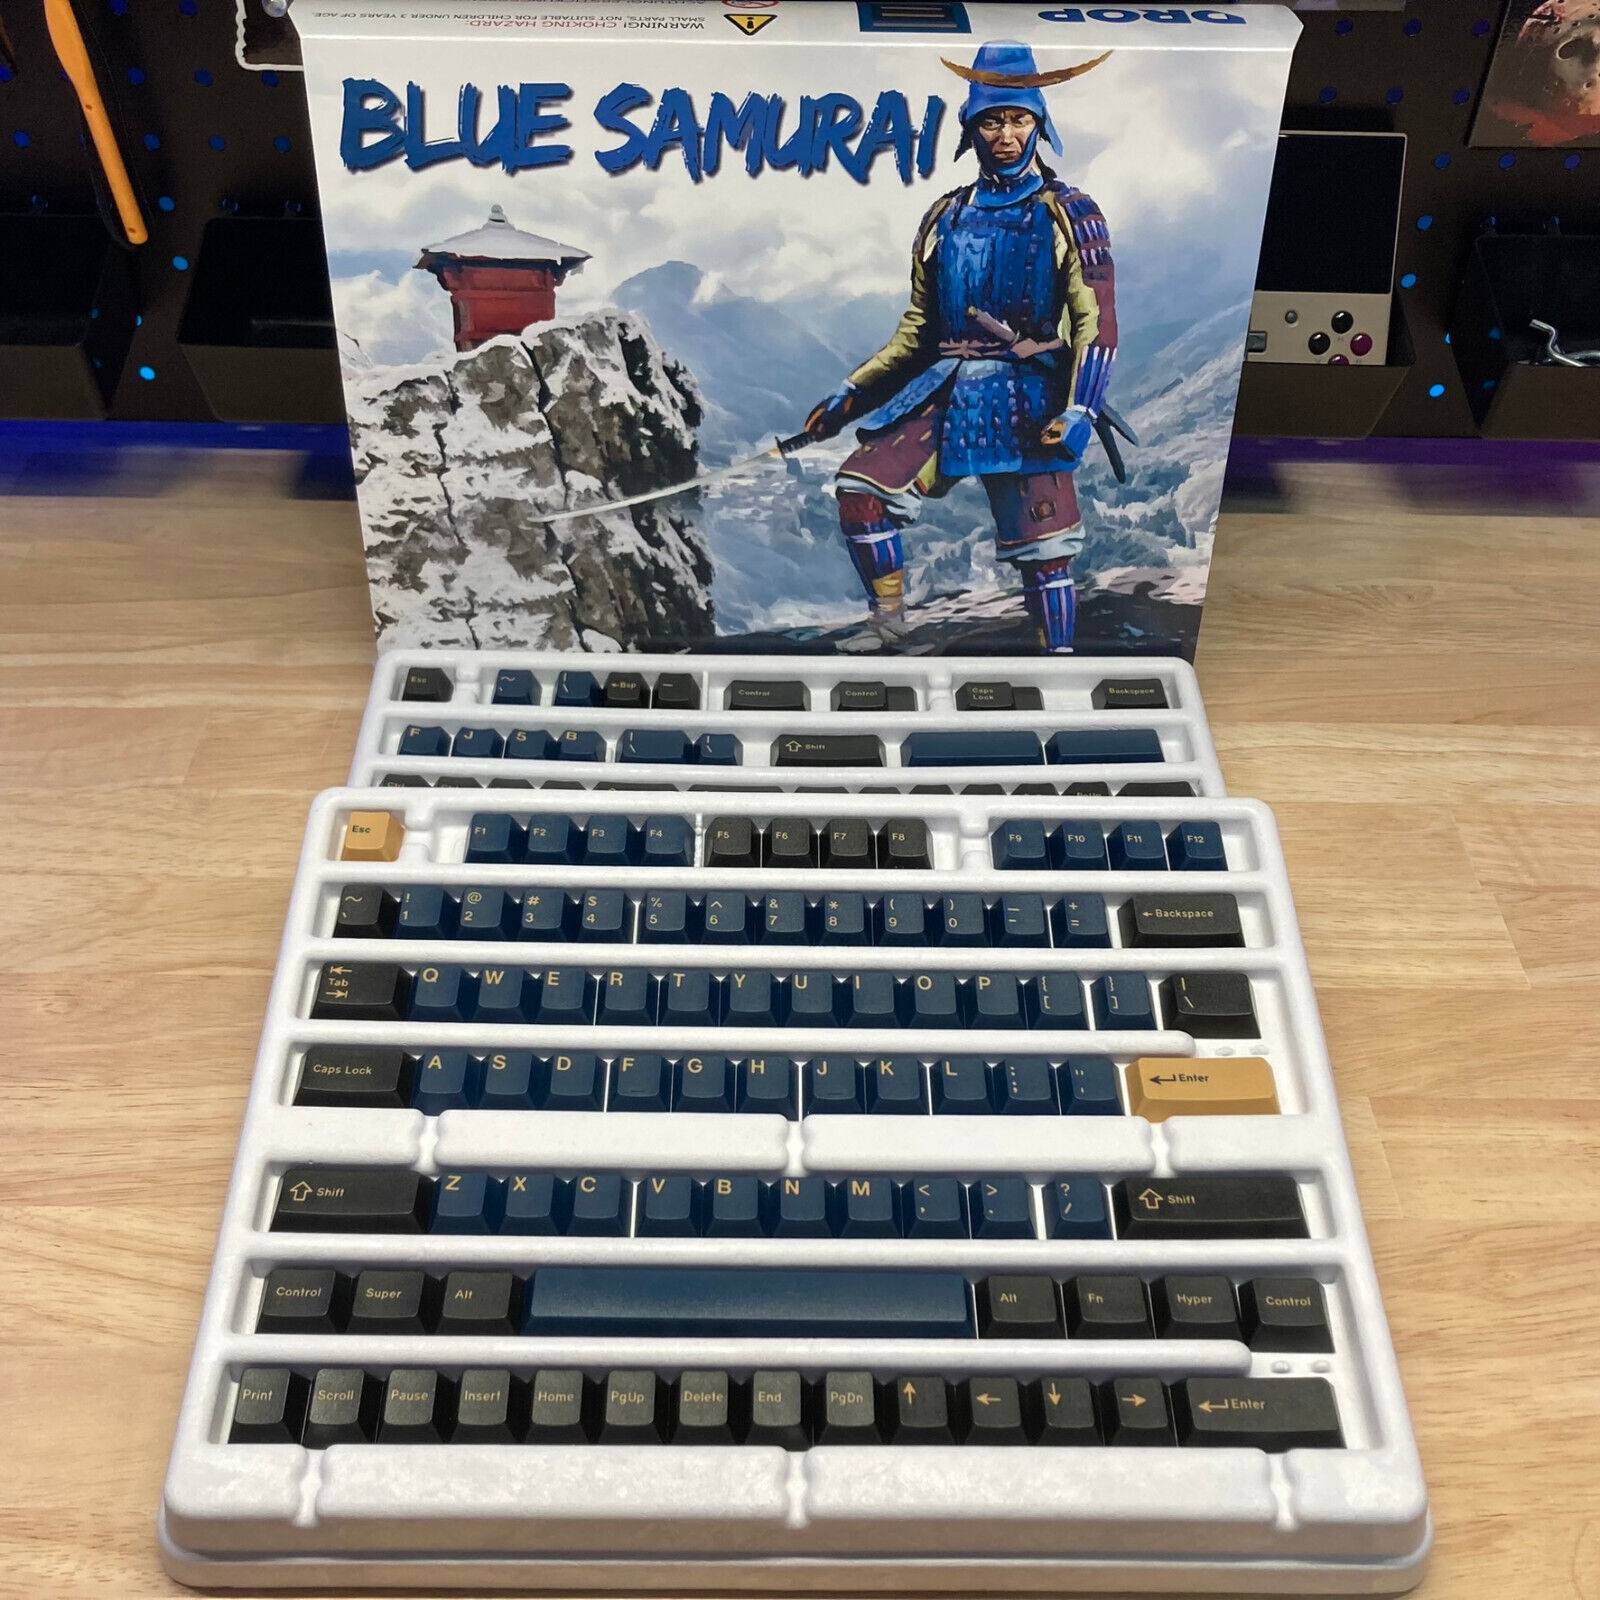 *Drop + RedSuns GMK Blue Samurai Keycap Set - Base Kit (Full Size Layout)*